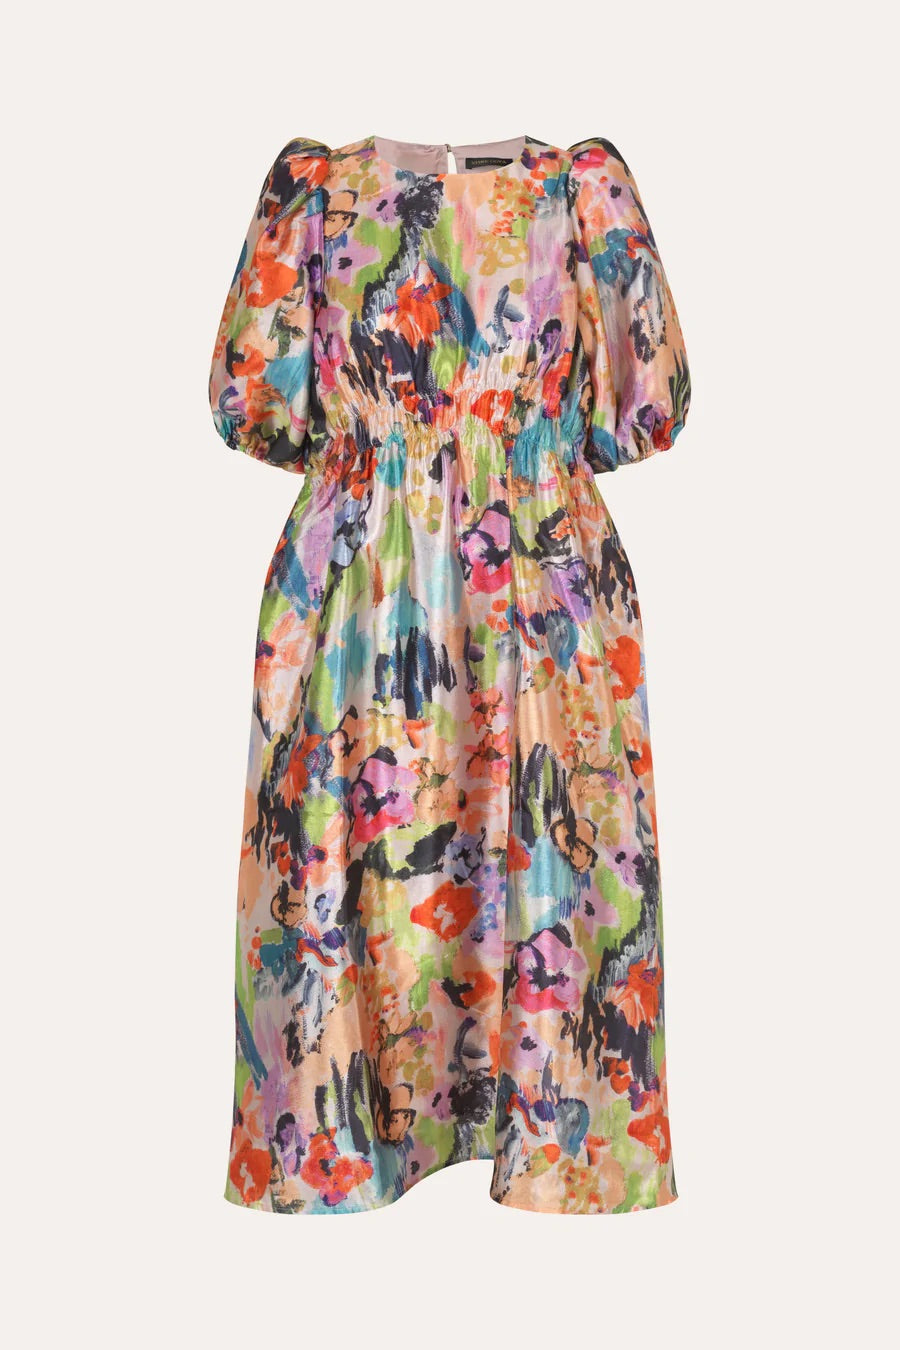 Stine Goya- Elizabeth Dress: Abstract Floral